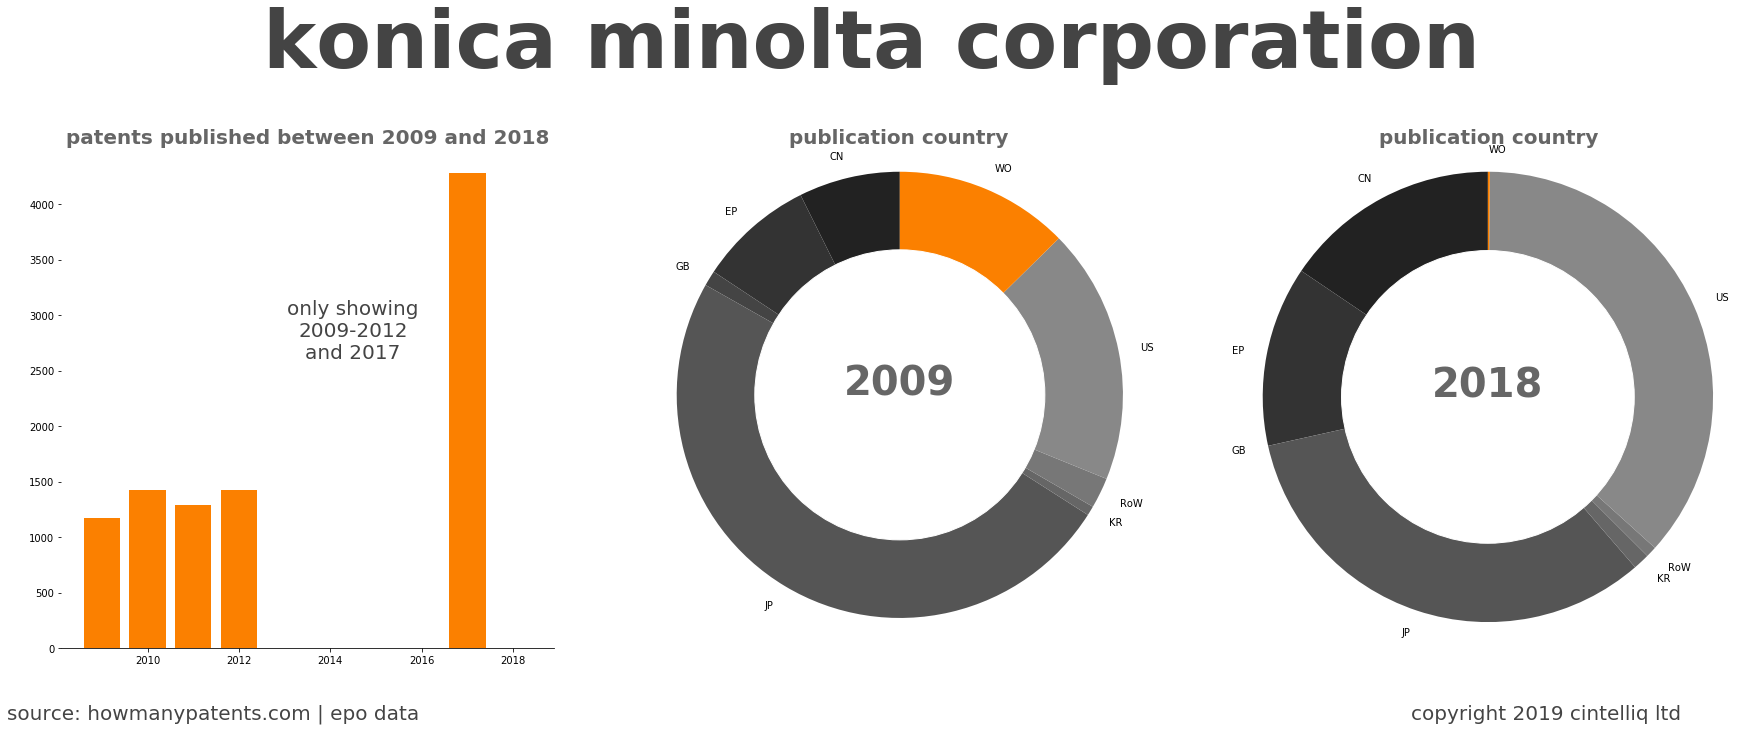 summary of patents for Konica Minolta Corporation